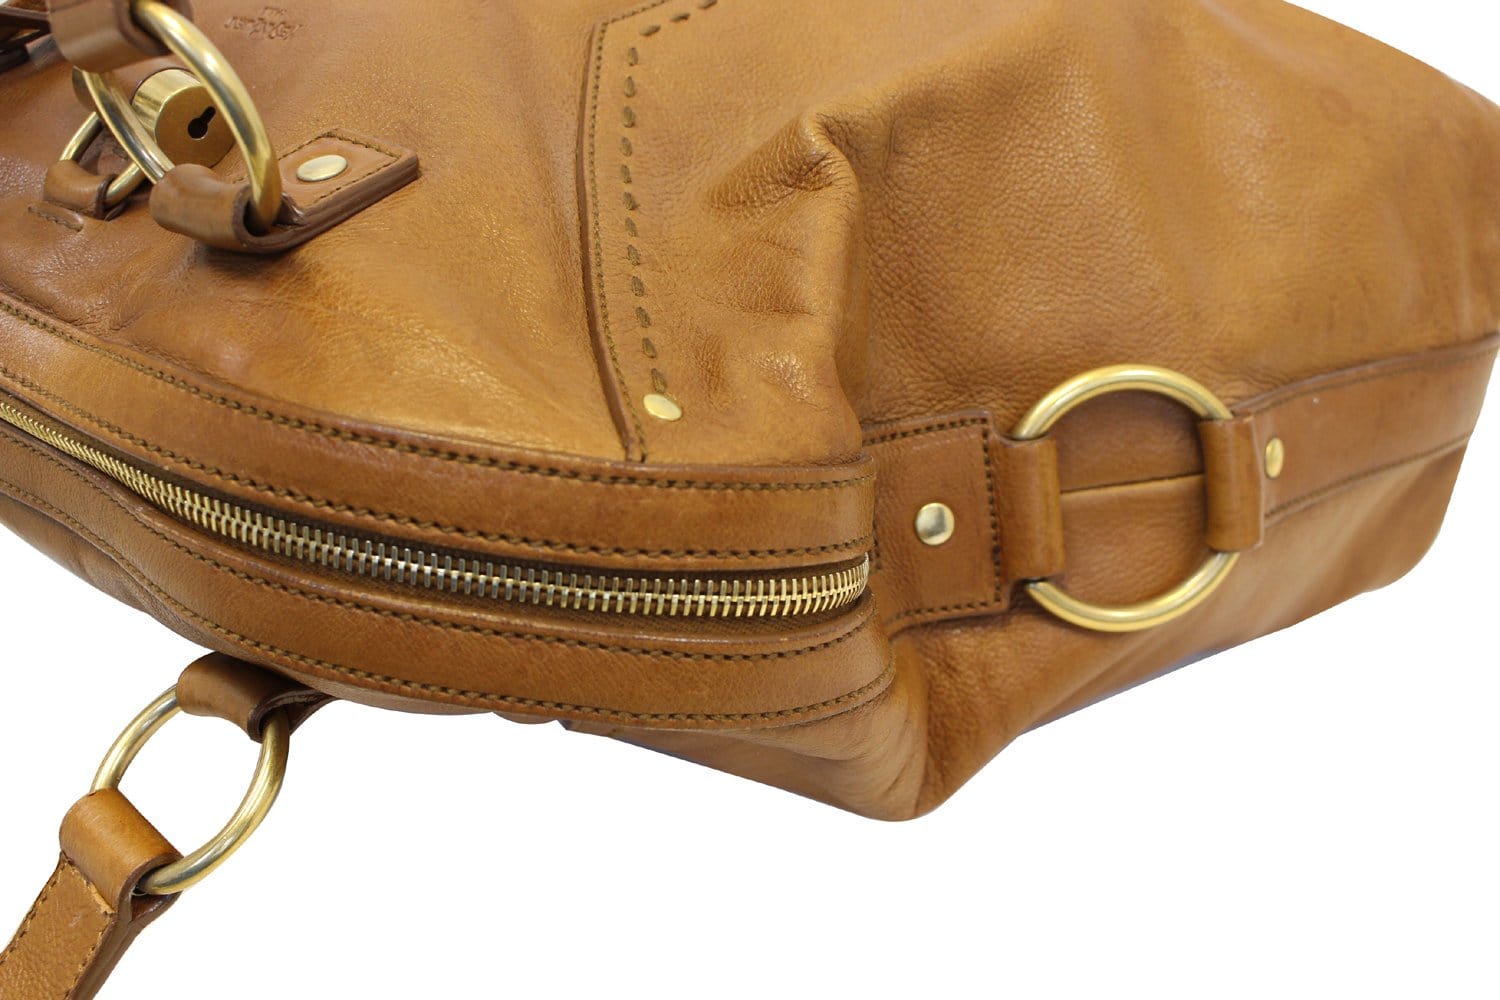 Yves Saint Laurent Muse Brown Leather Satchel Bag